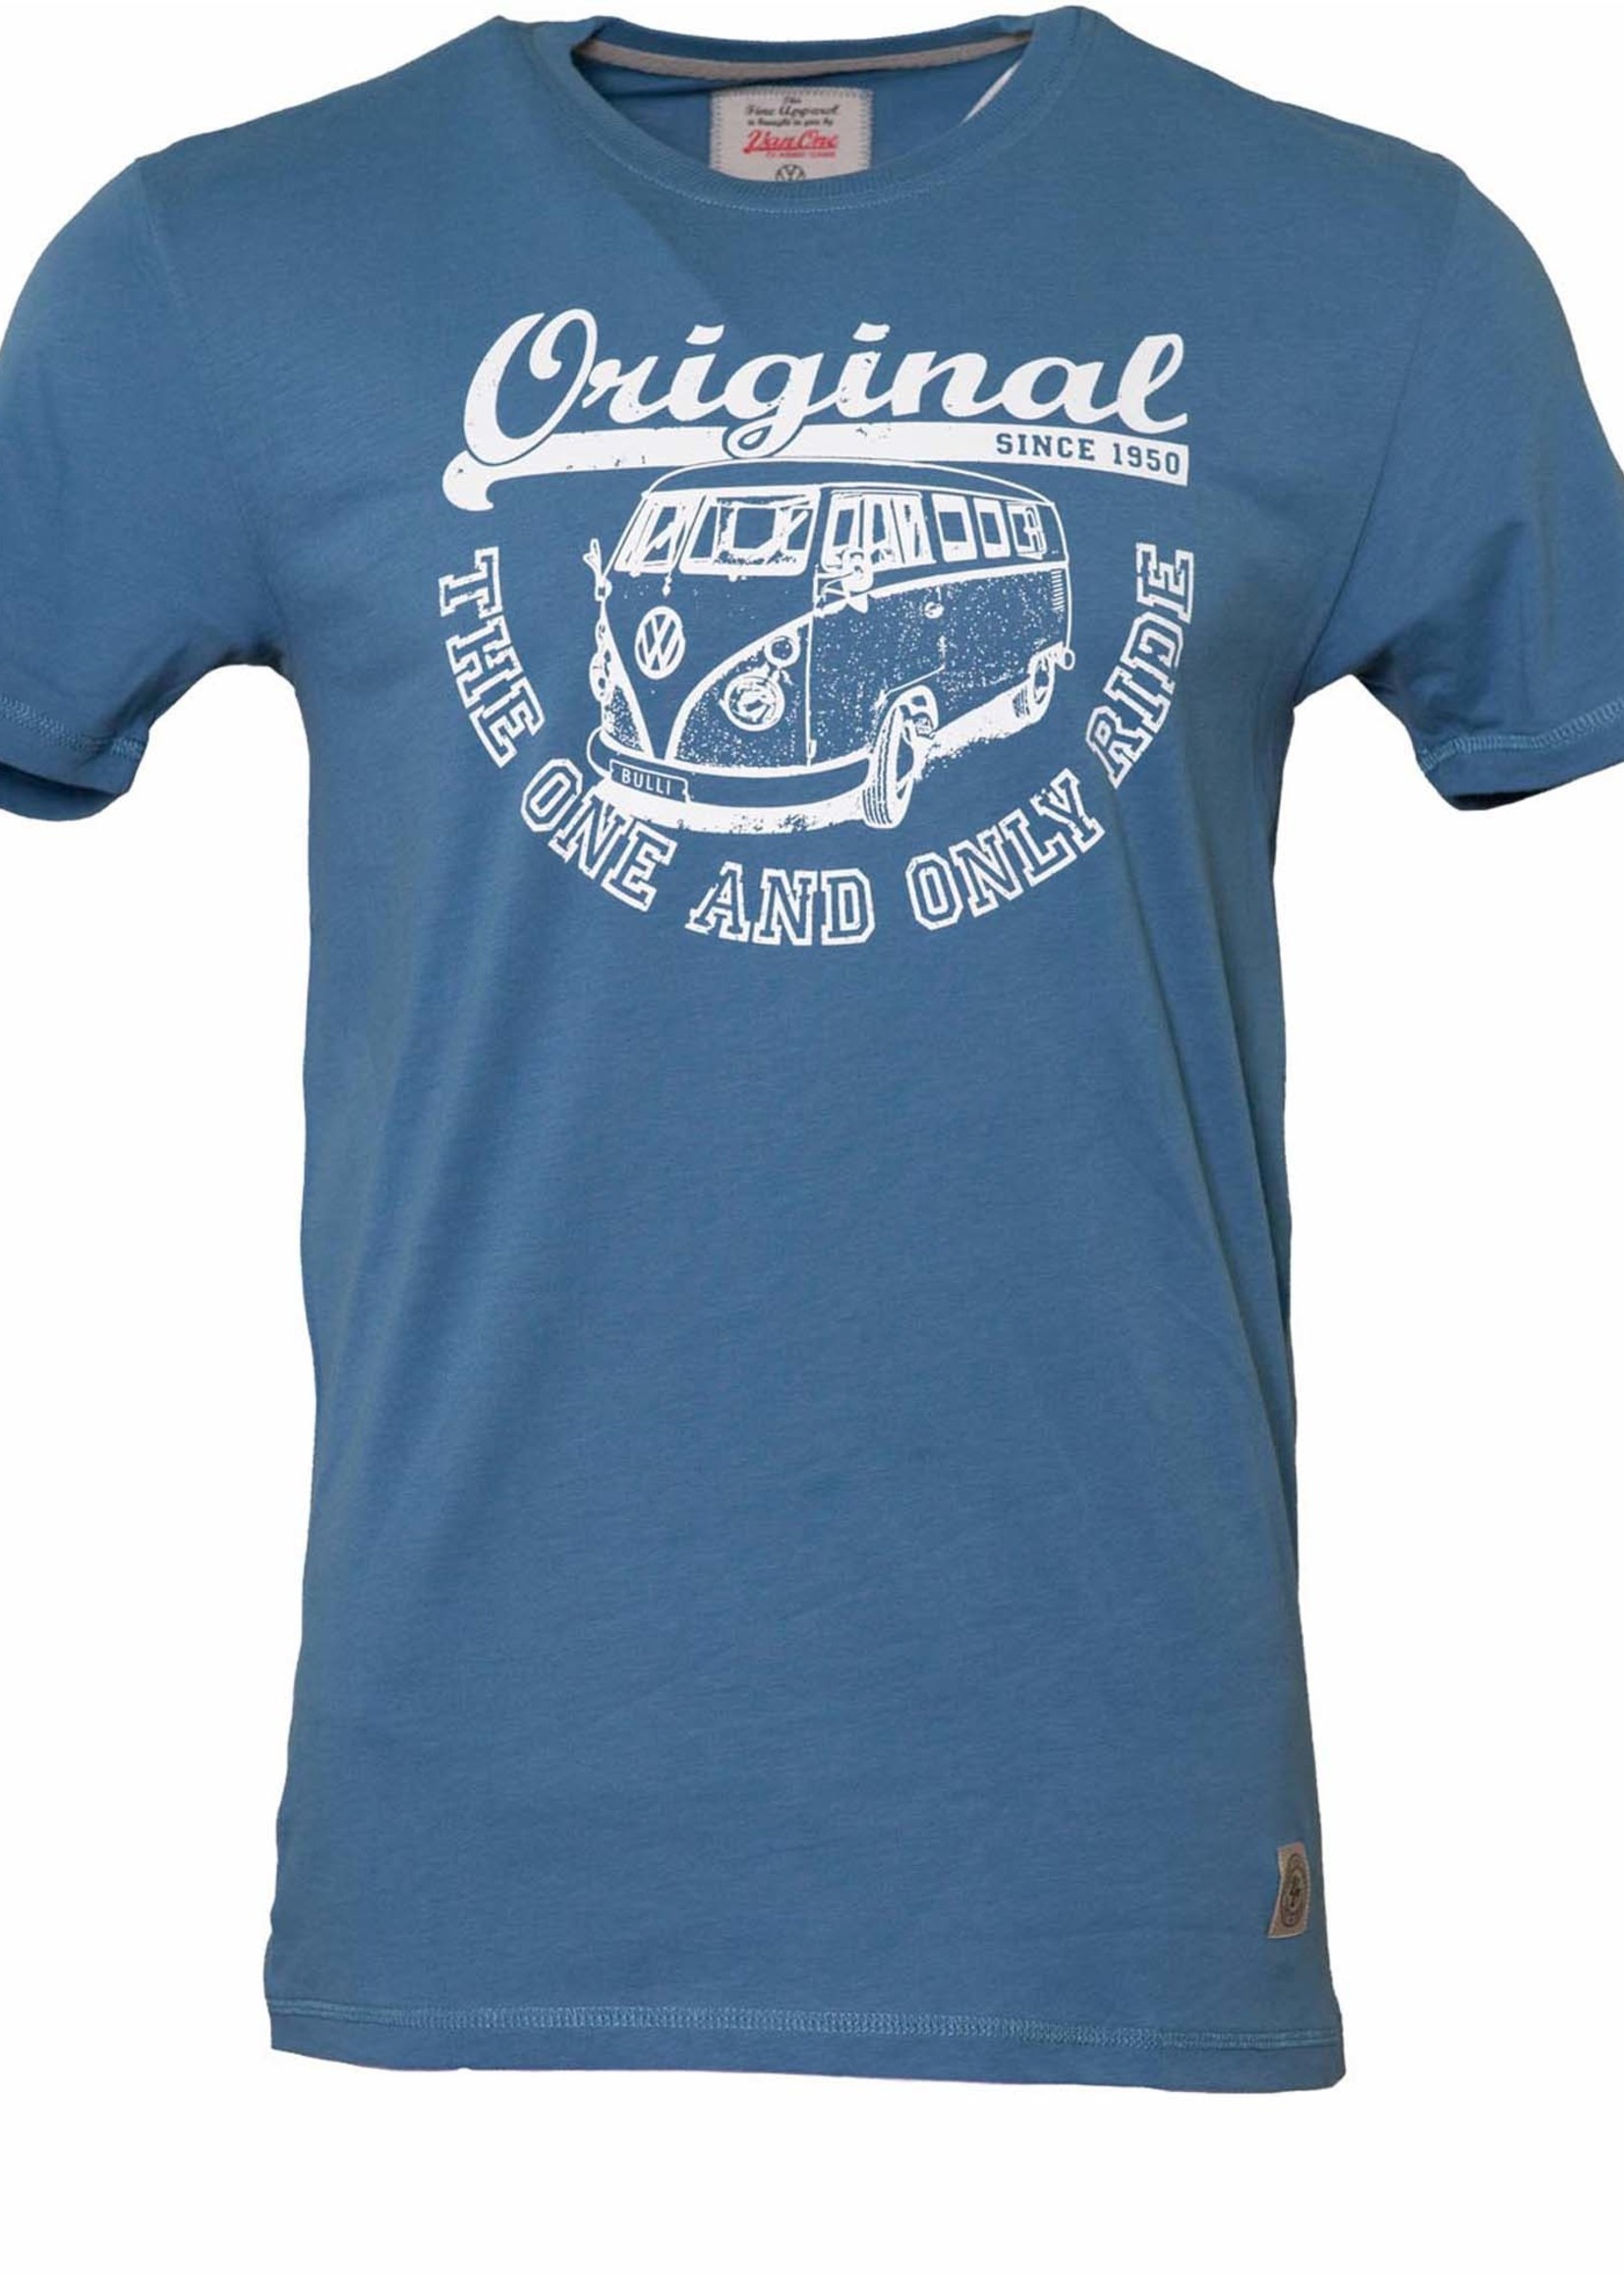 Van One Classic Cars VOCC Surfteam t-shirt blue/multi